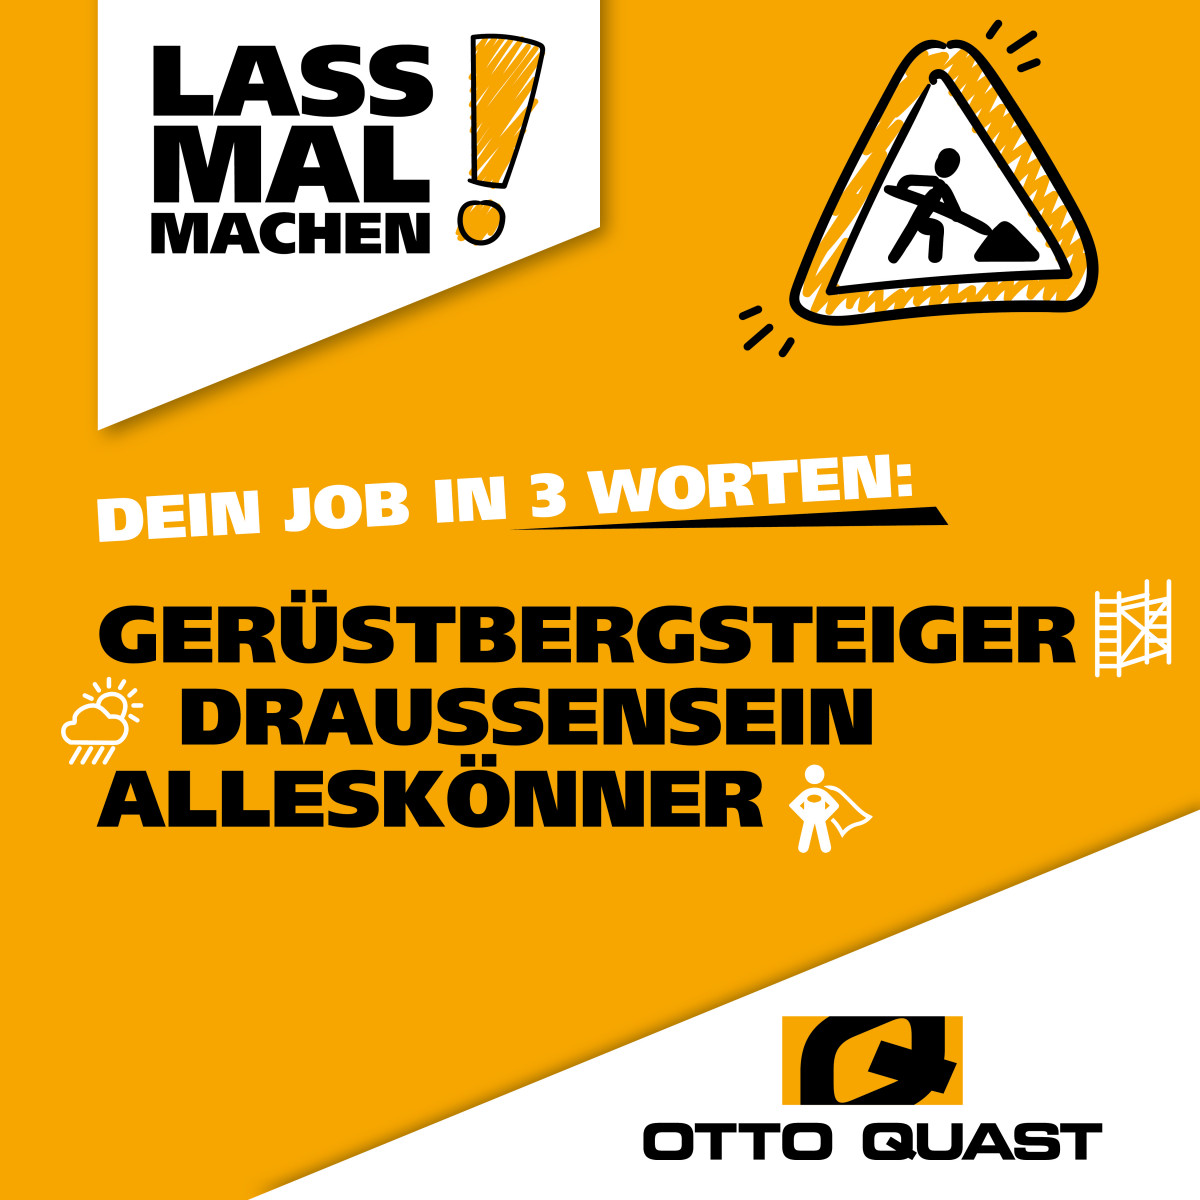 OTTO QUAST GmbH & Co. KG